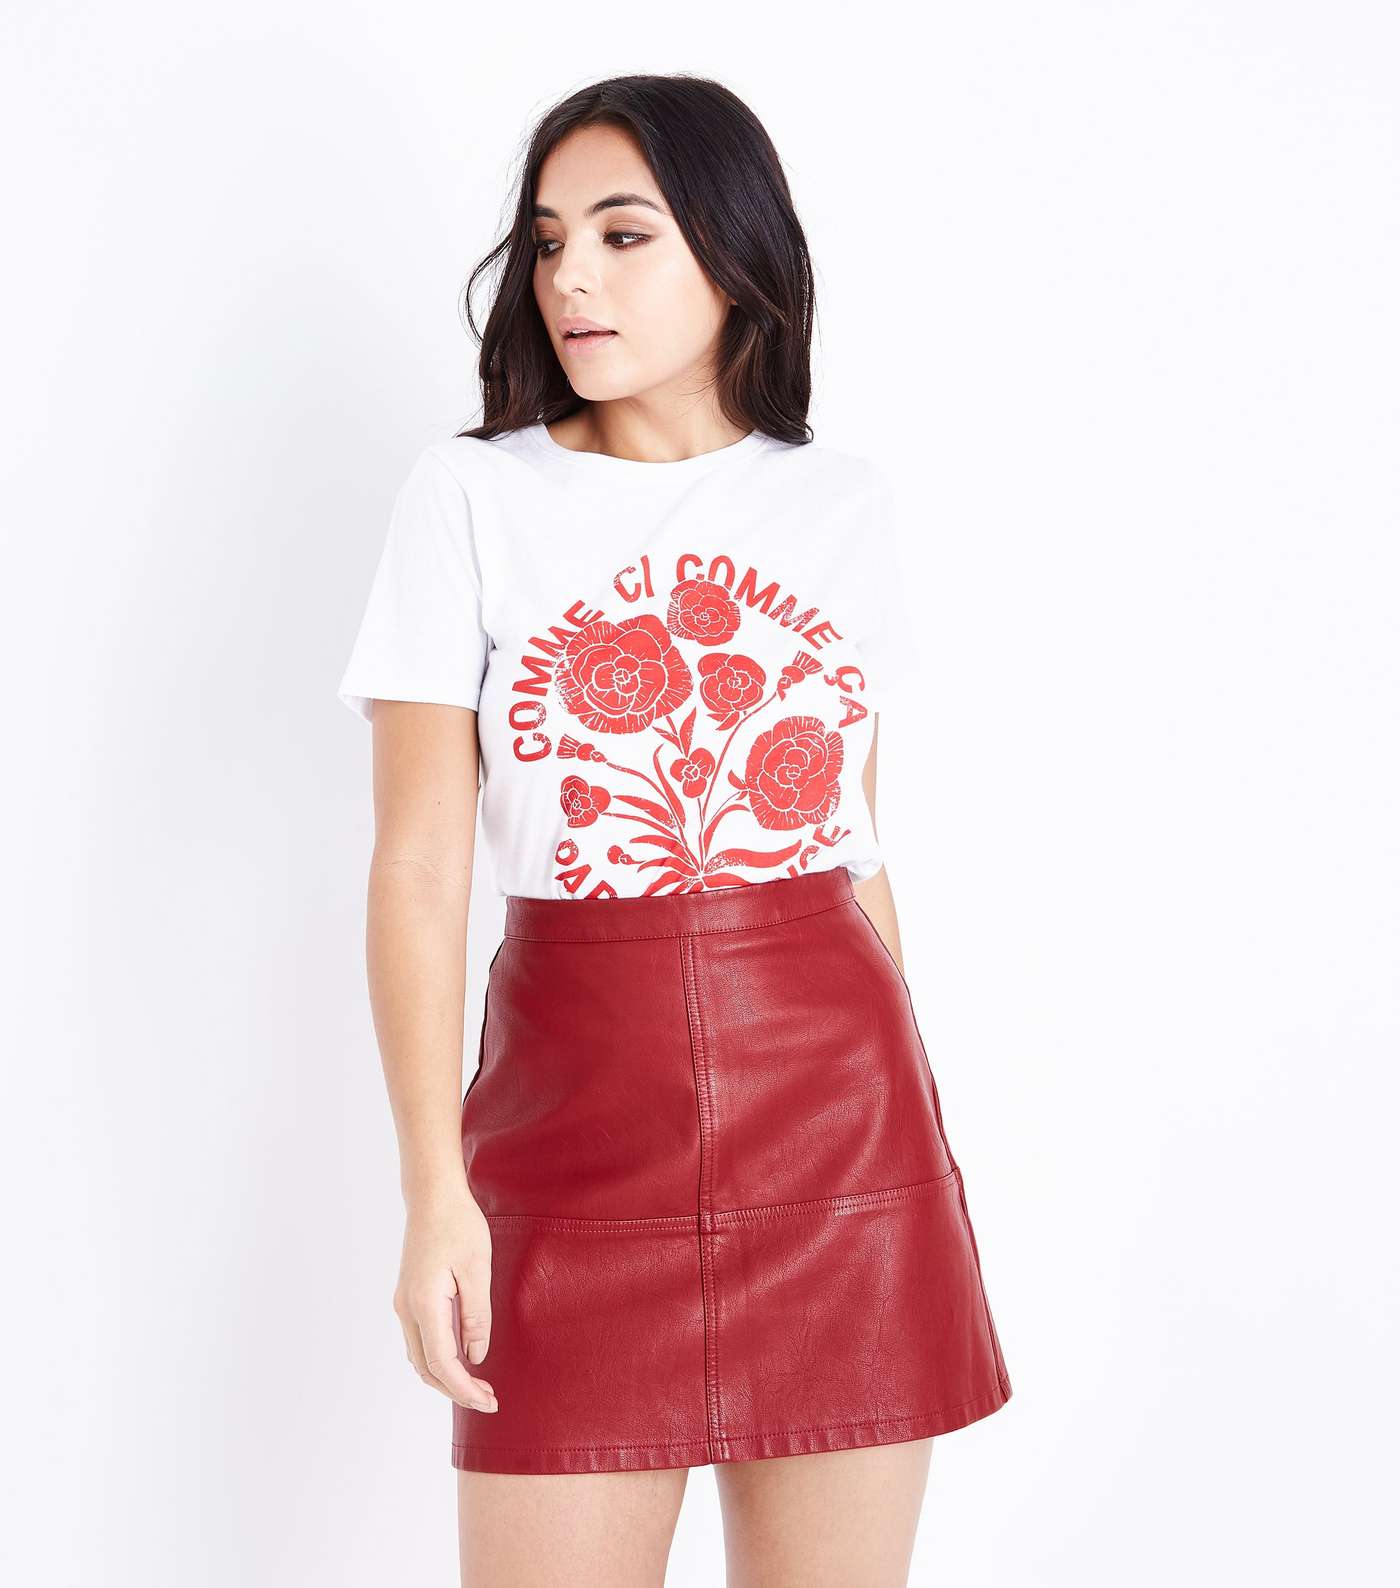 Petite Dark Red Leather-Look Mini Skirt